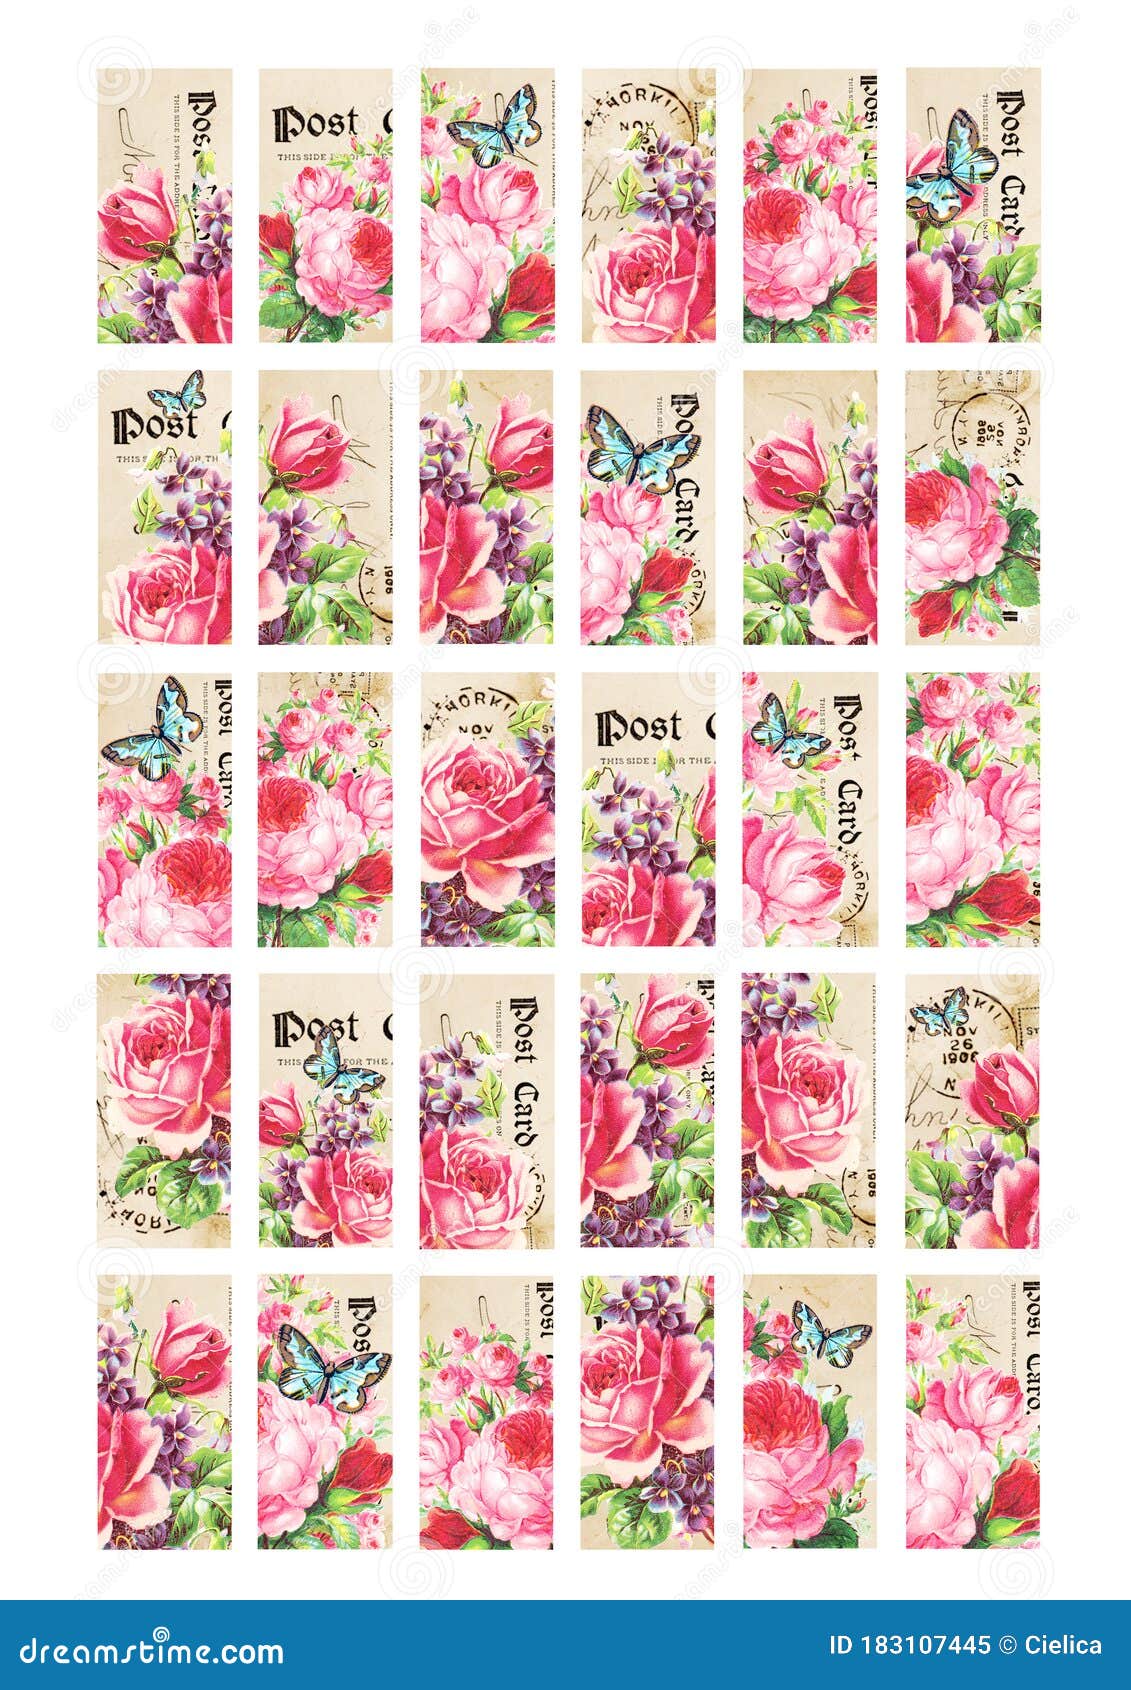 rose garden domino images 1x2 rectangular printables